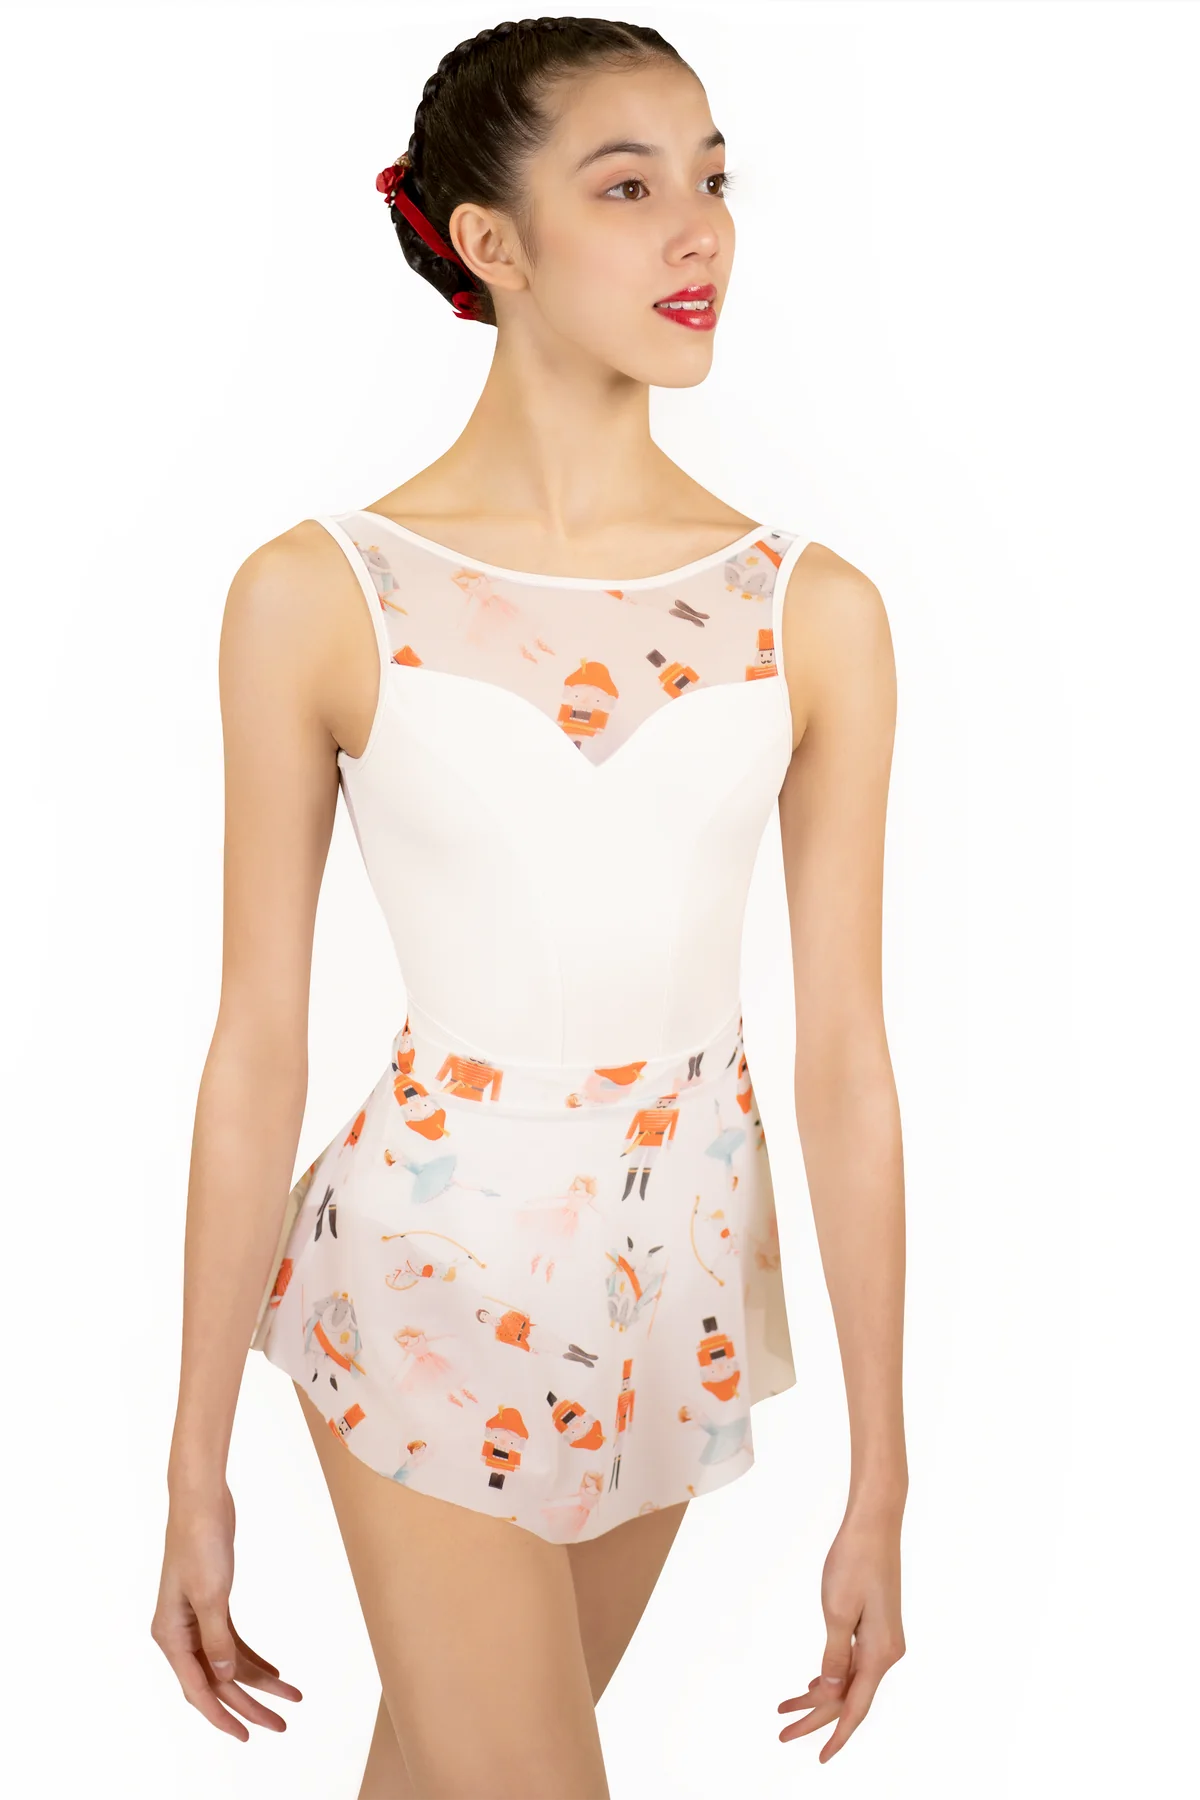 Exotic Dancewear Neon Orange Thong Bodysuit stripper Dancewearrave Outfits  Club-attire by Bodysuitkloset 